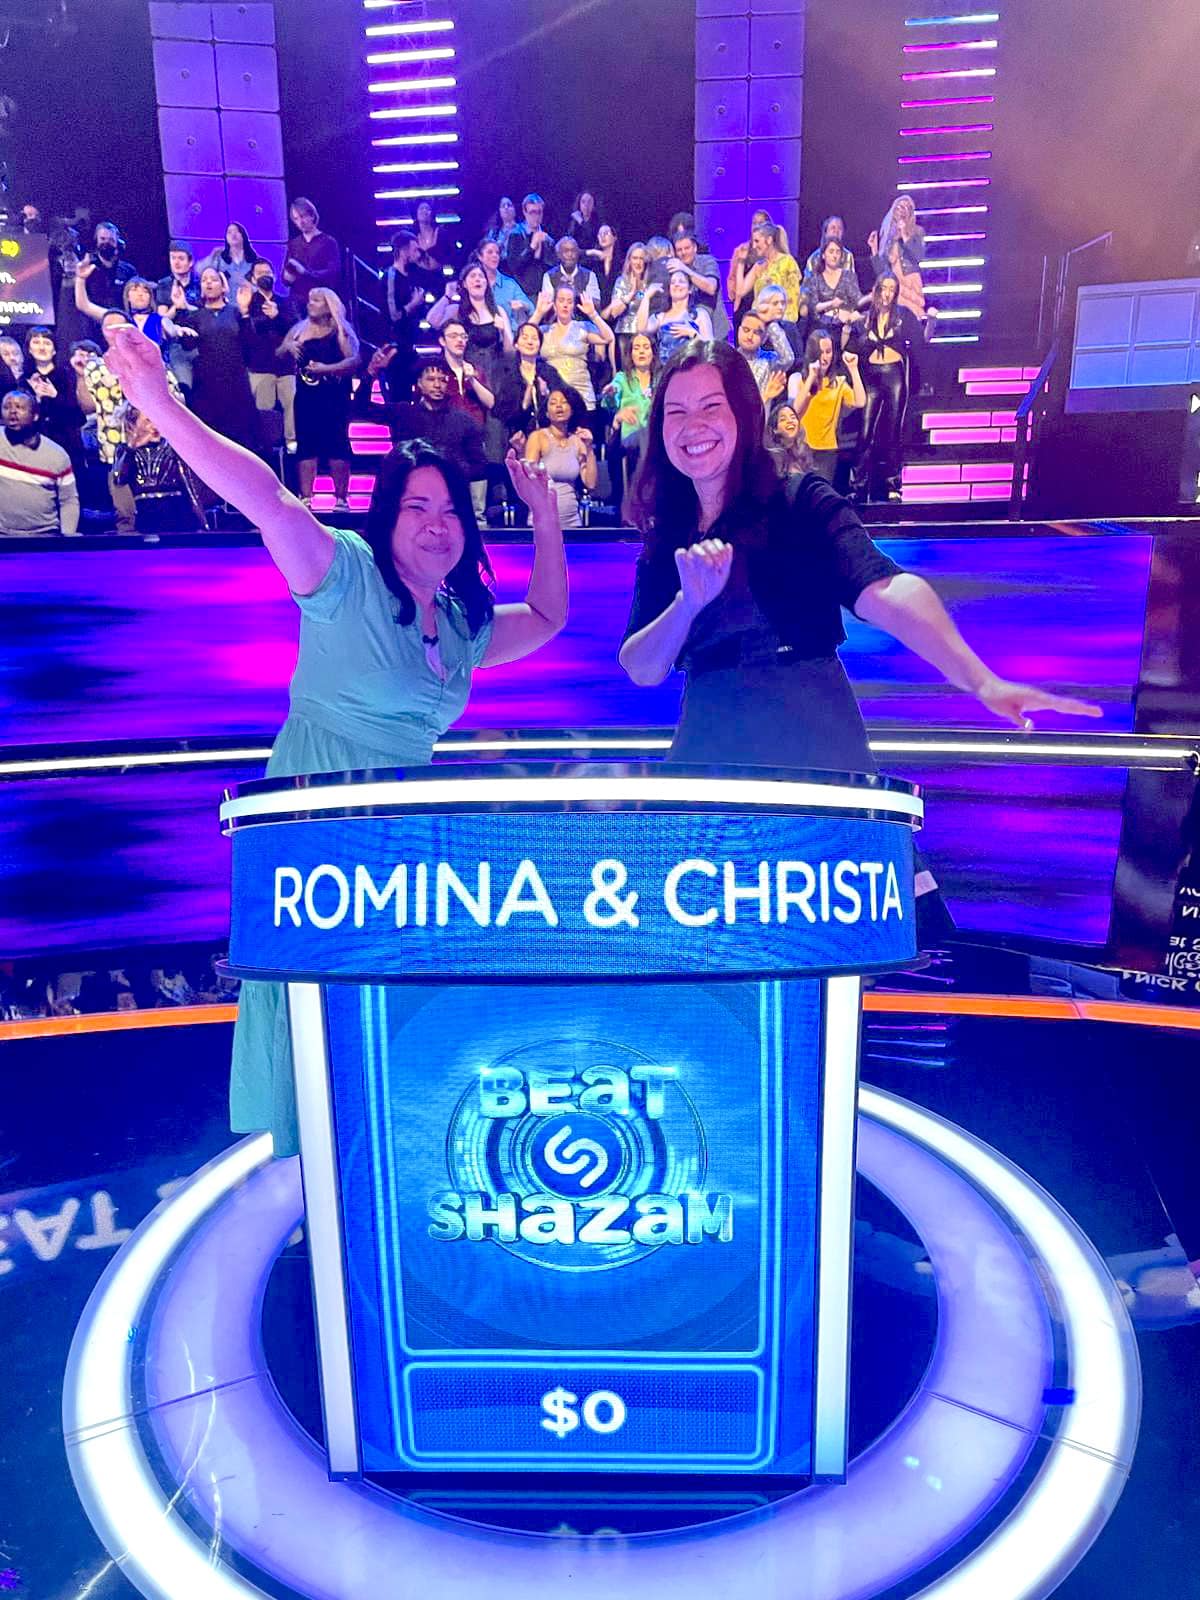 Romina and Christa - Shazam joy